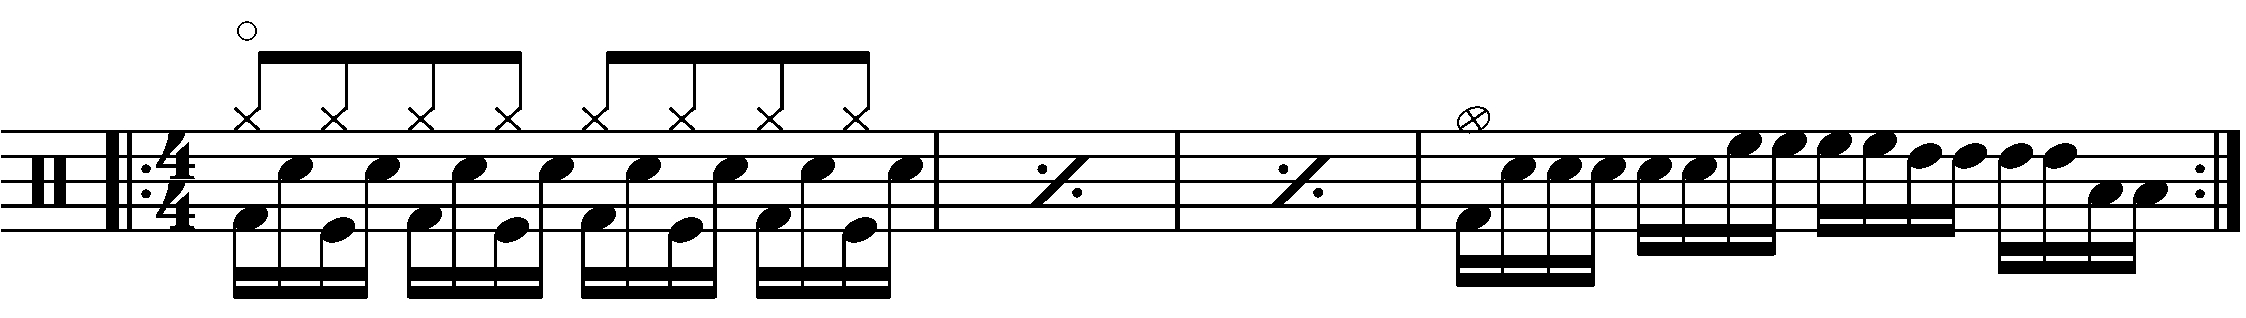 A four bar phrase built around sub divided eighth note blast beats